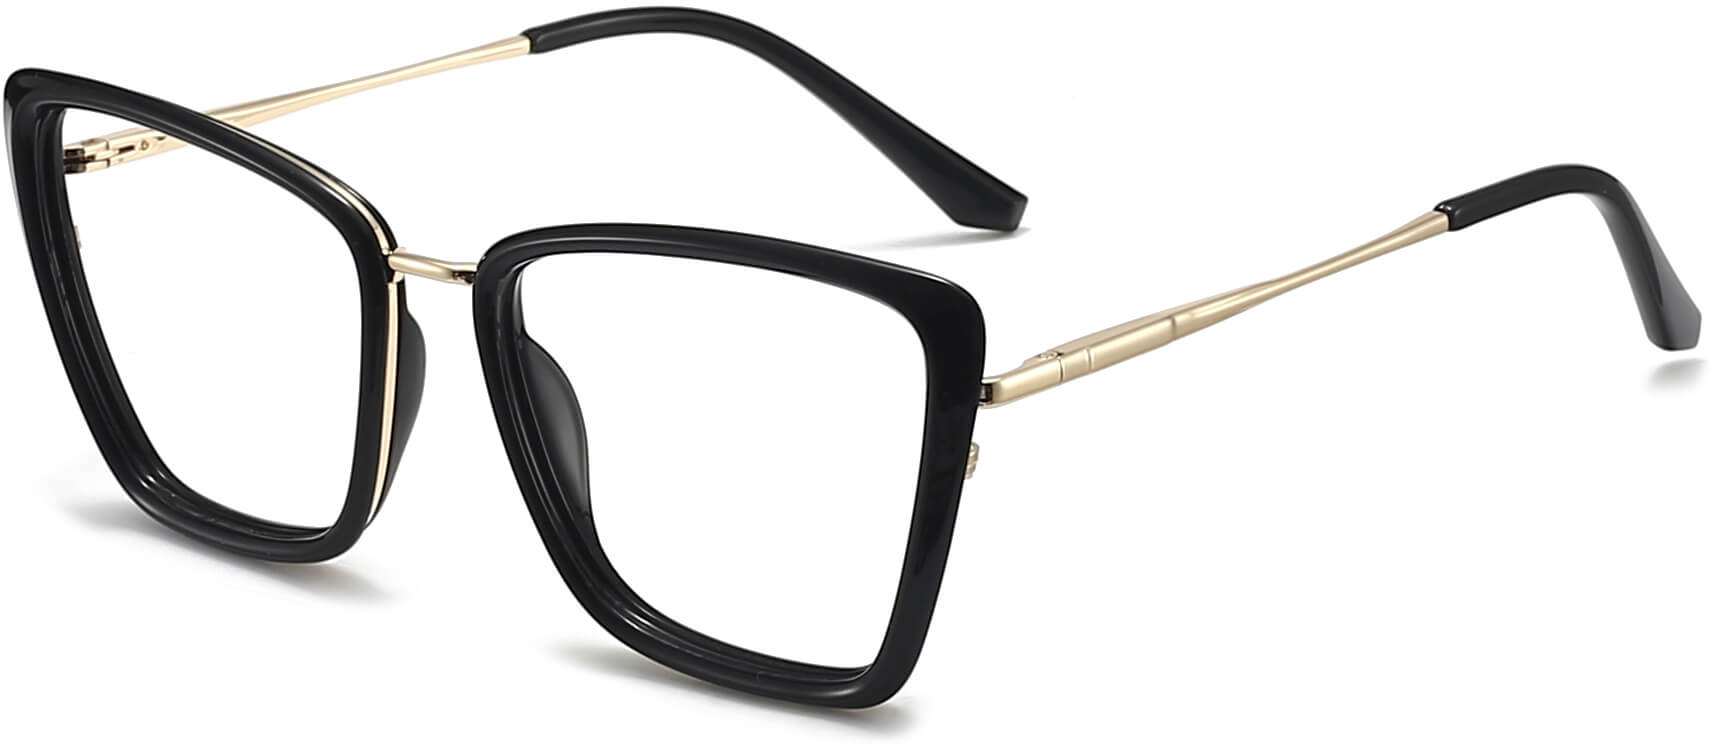 Noemi Cateye Black Eyeglasses from ANRRI, angle view